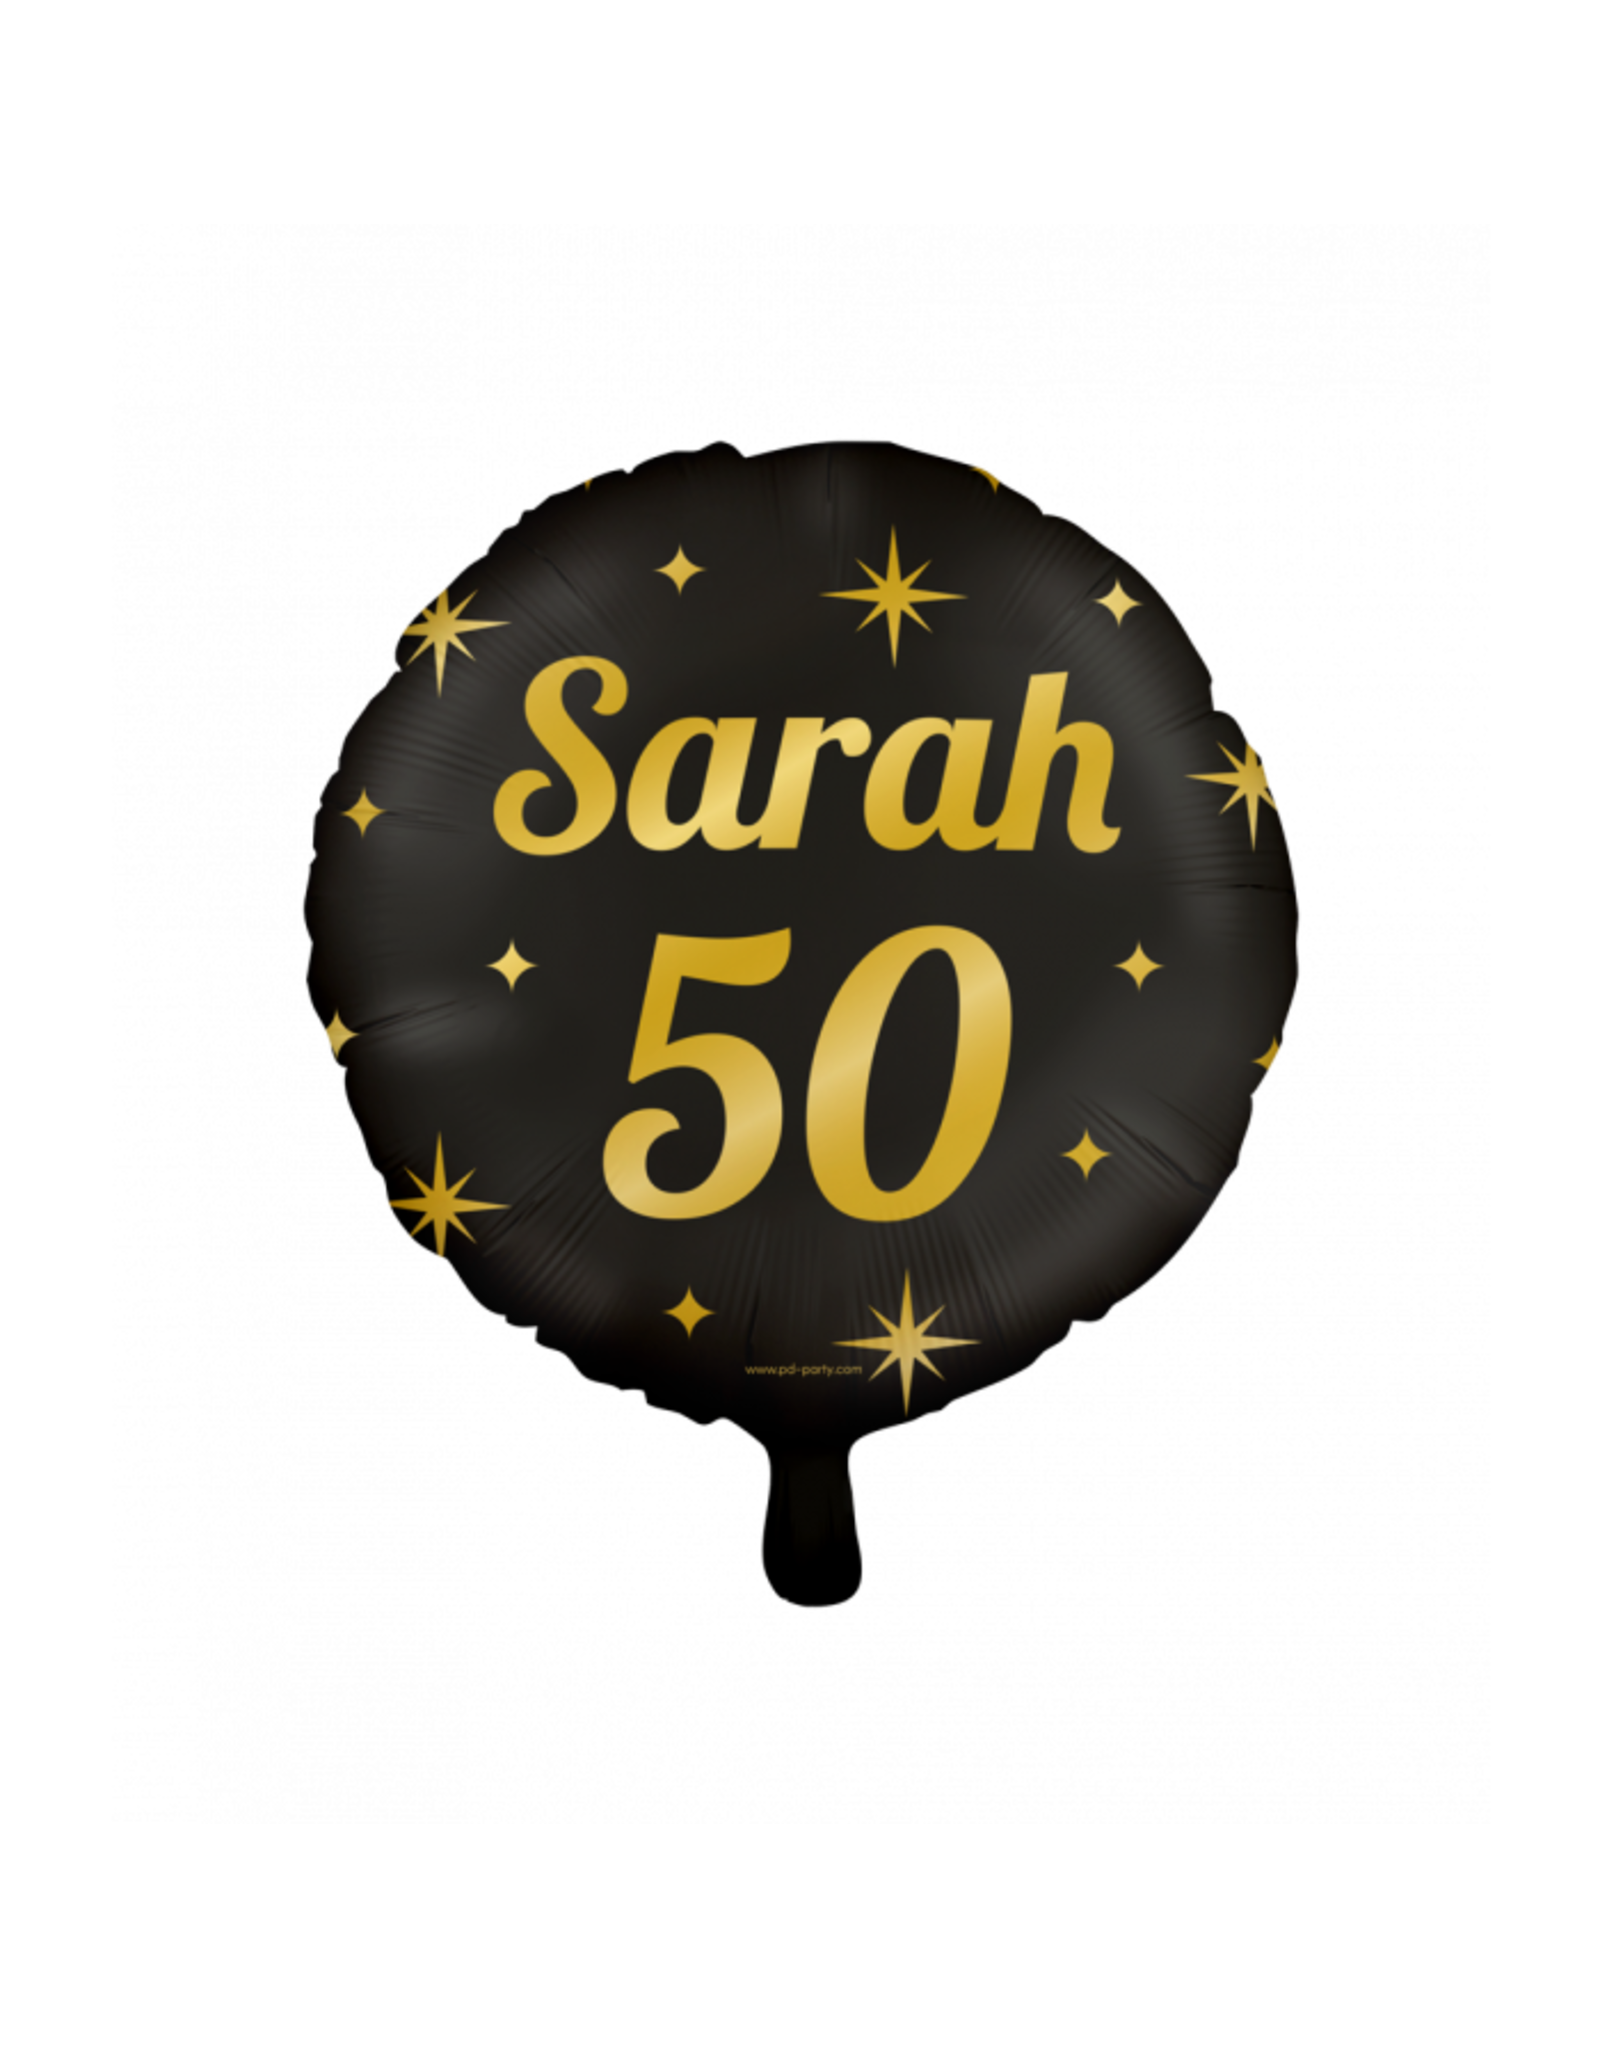 Party Foil Balloon - 50 Sarah